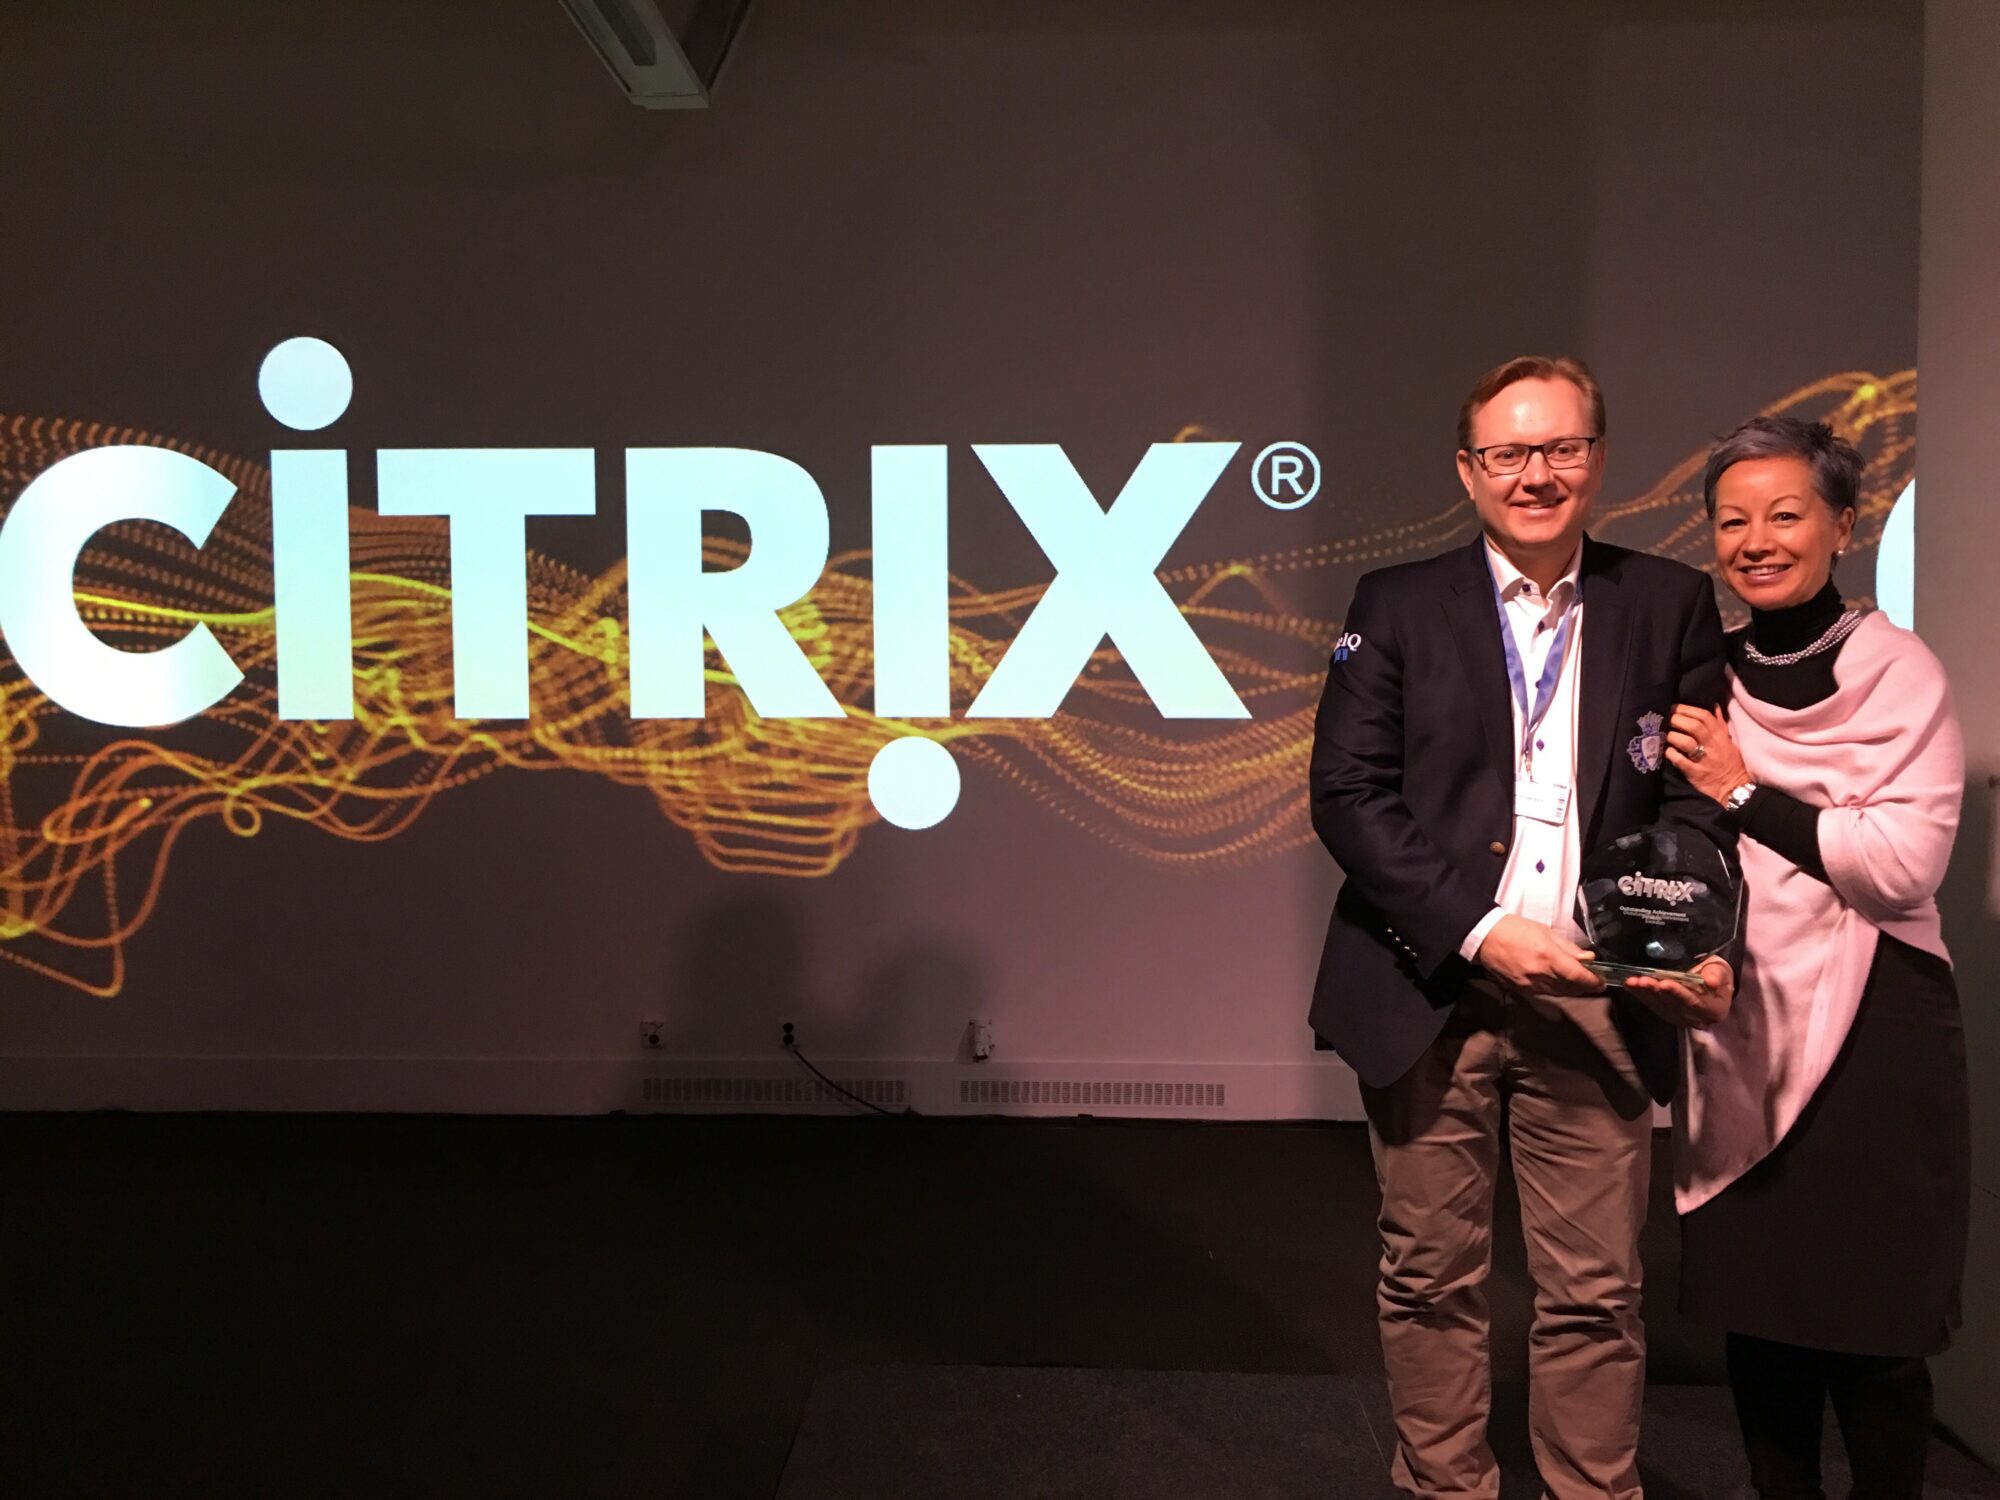 AceIQ vinnare av ”Citrix Outstanding Achievement Award”